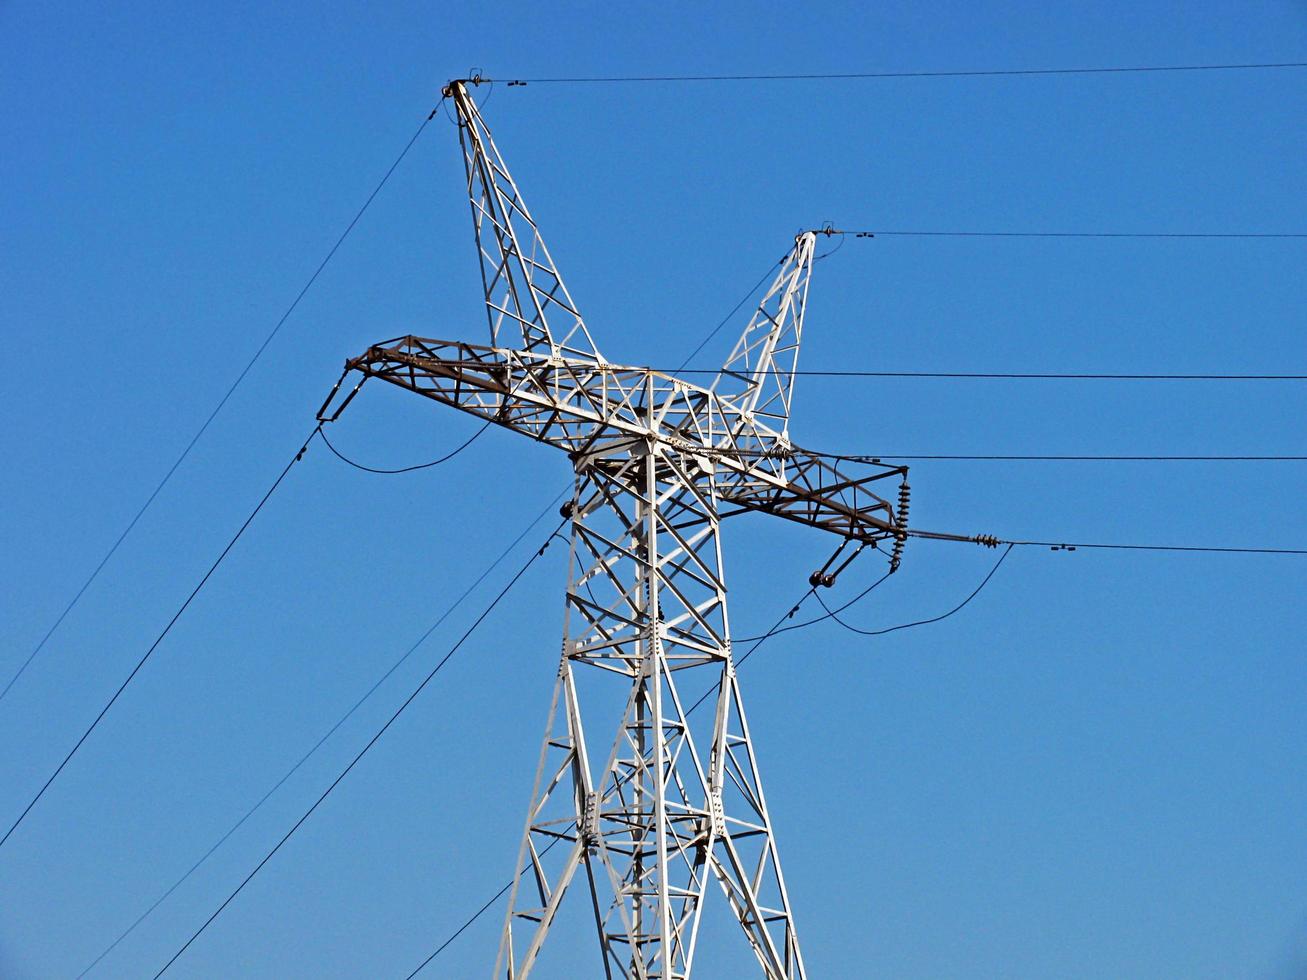 electricity pylon against blue sky photo